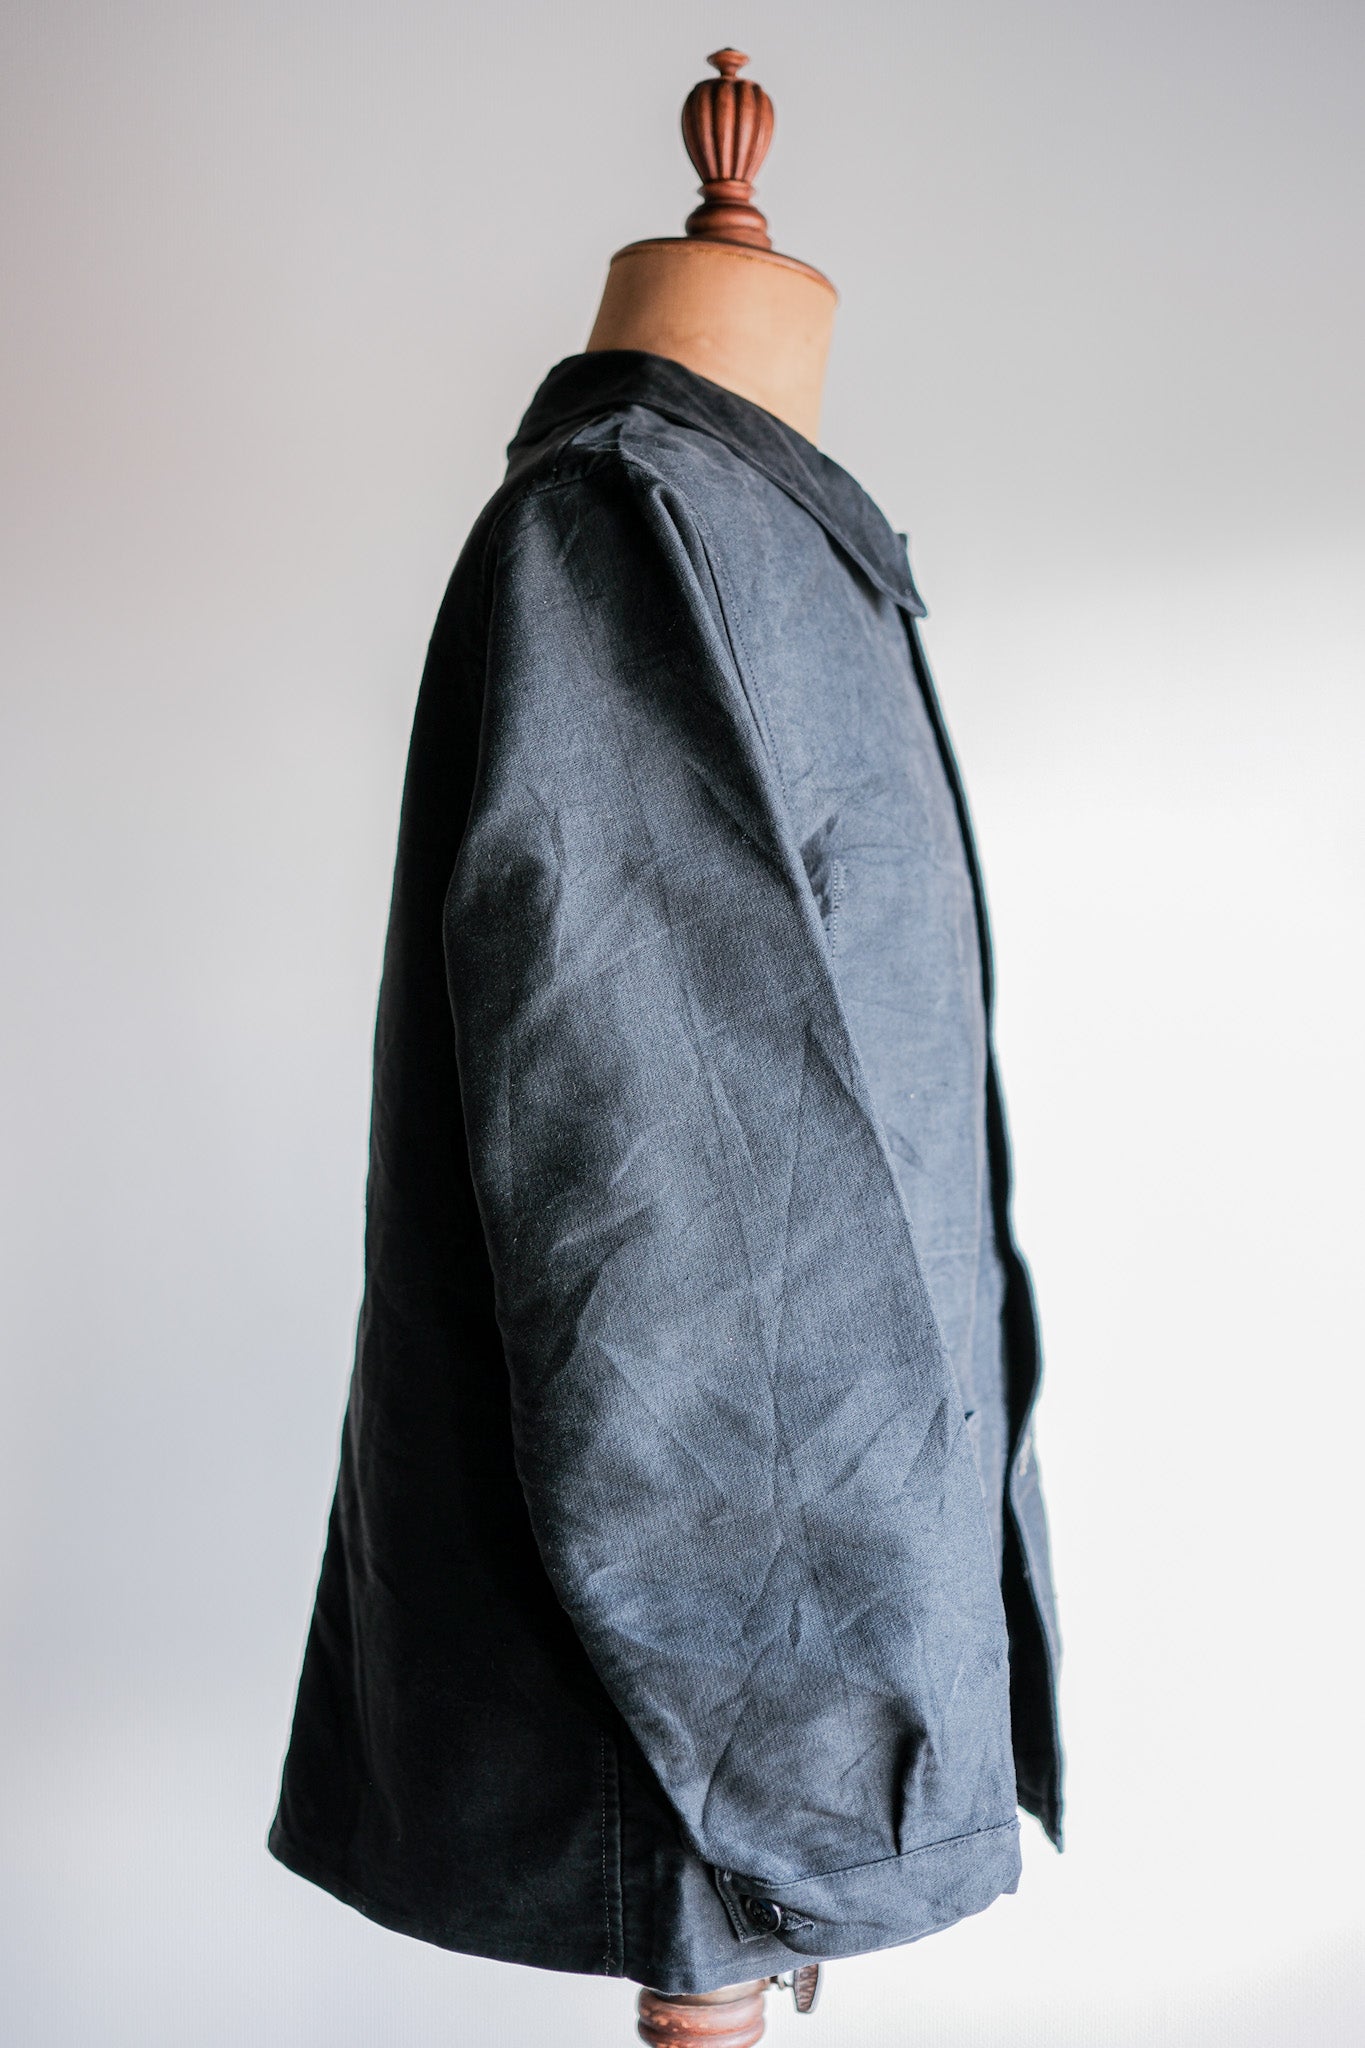 [~ 30's] French Vintage Black Moleskin Work Jacket "Le Mont St. Michel"